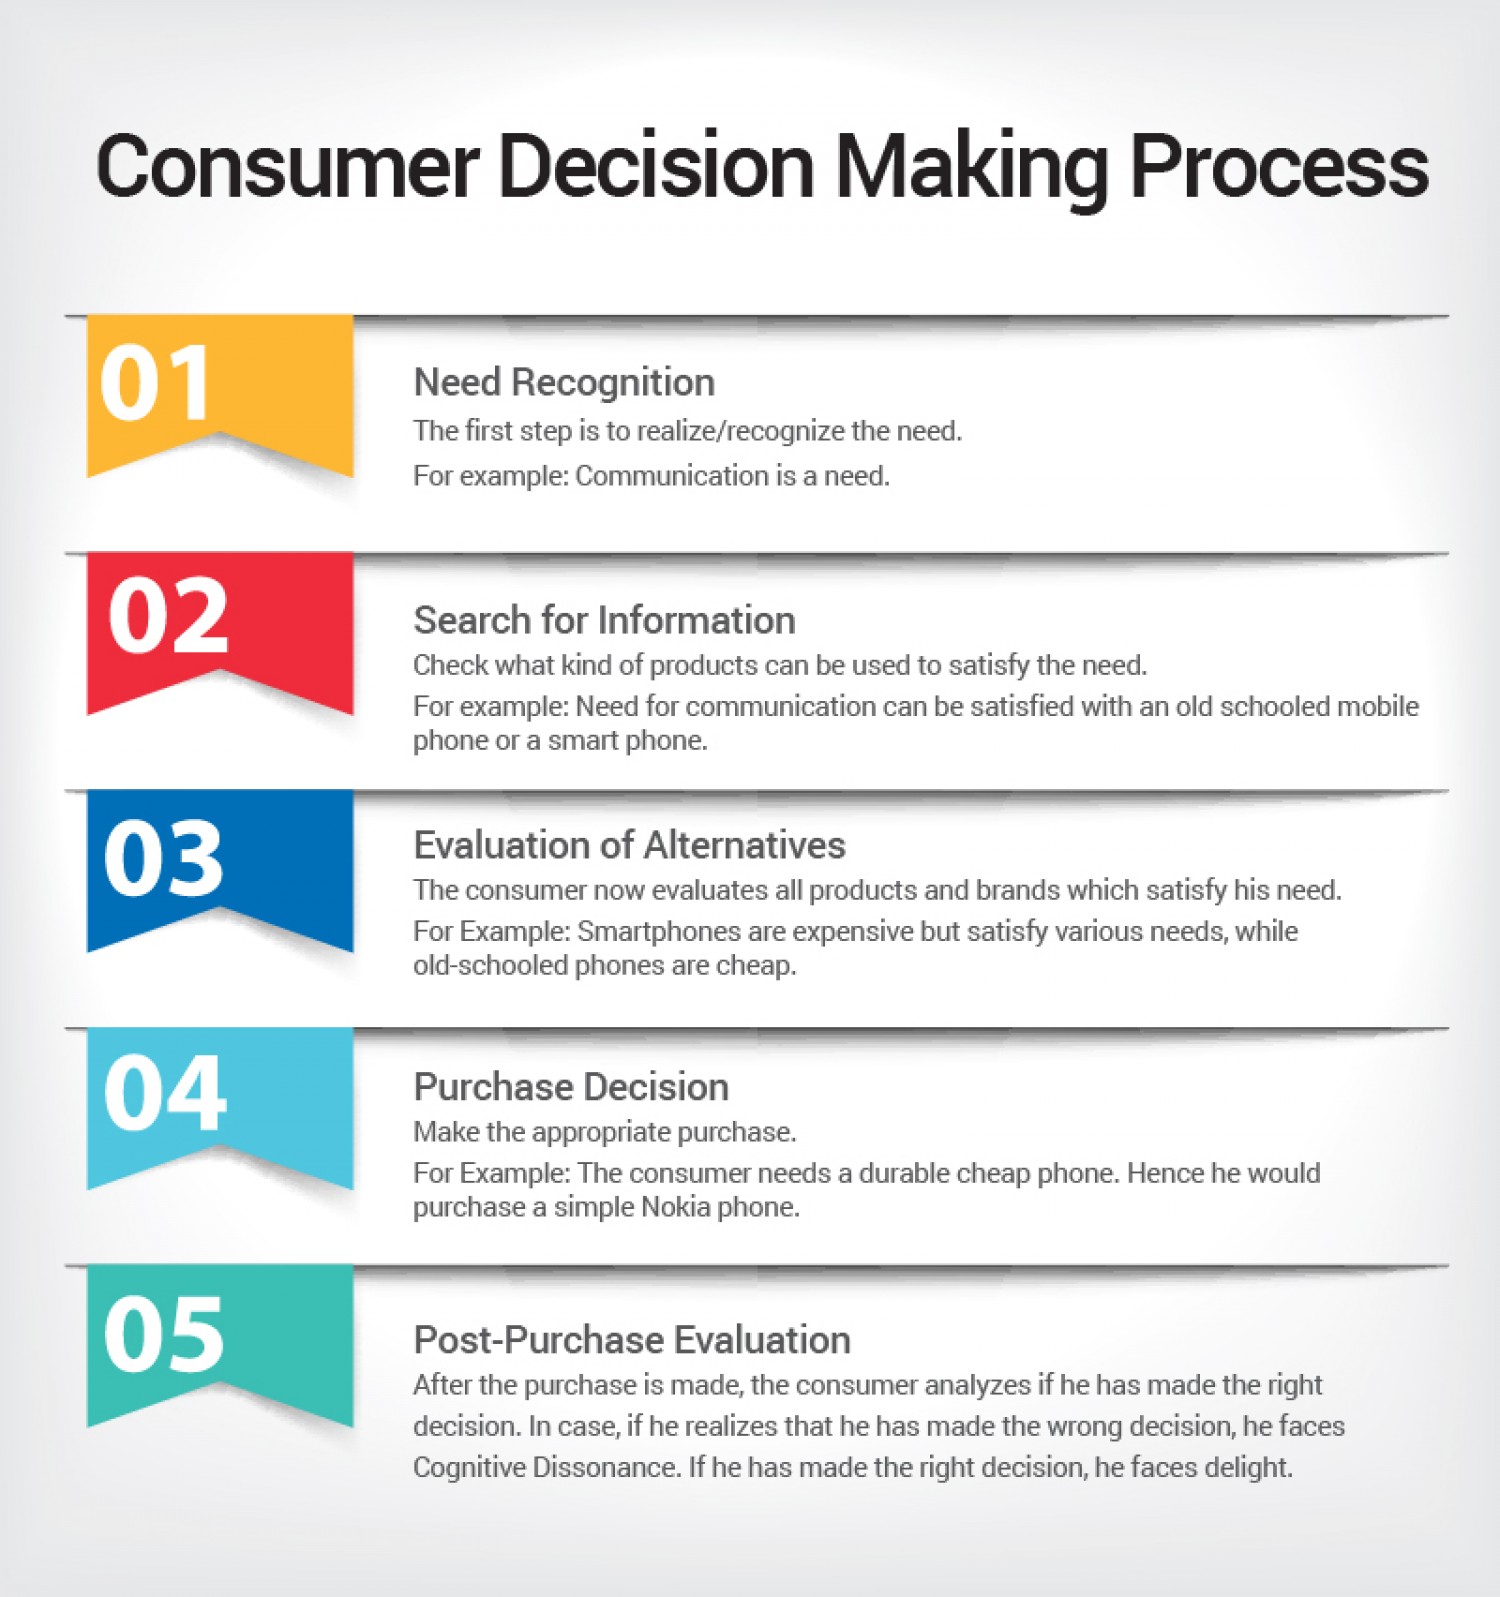 Decision Making Process